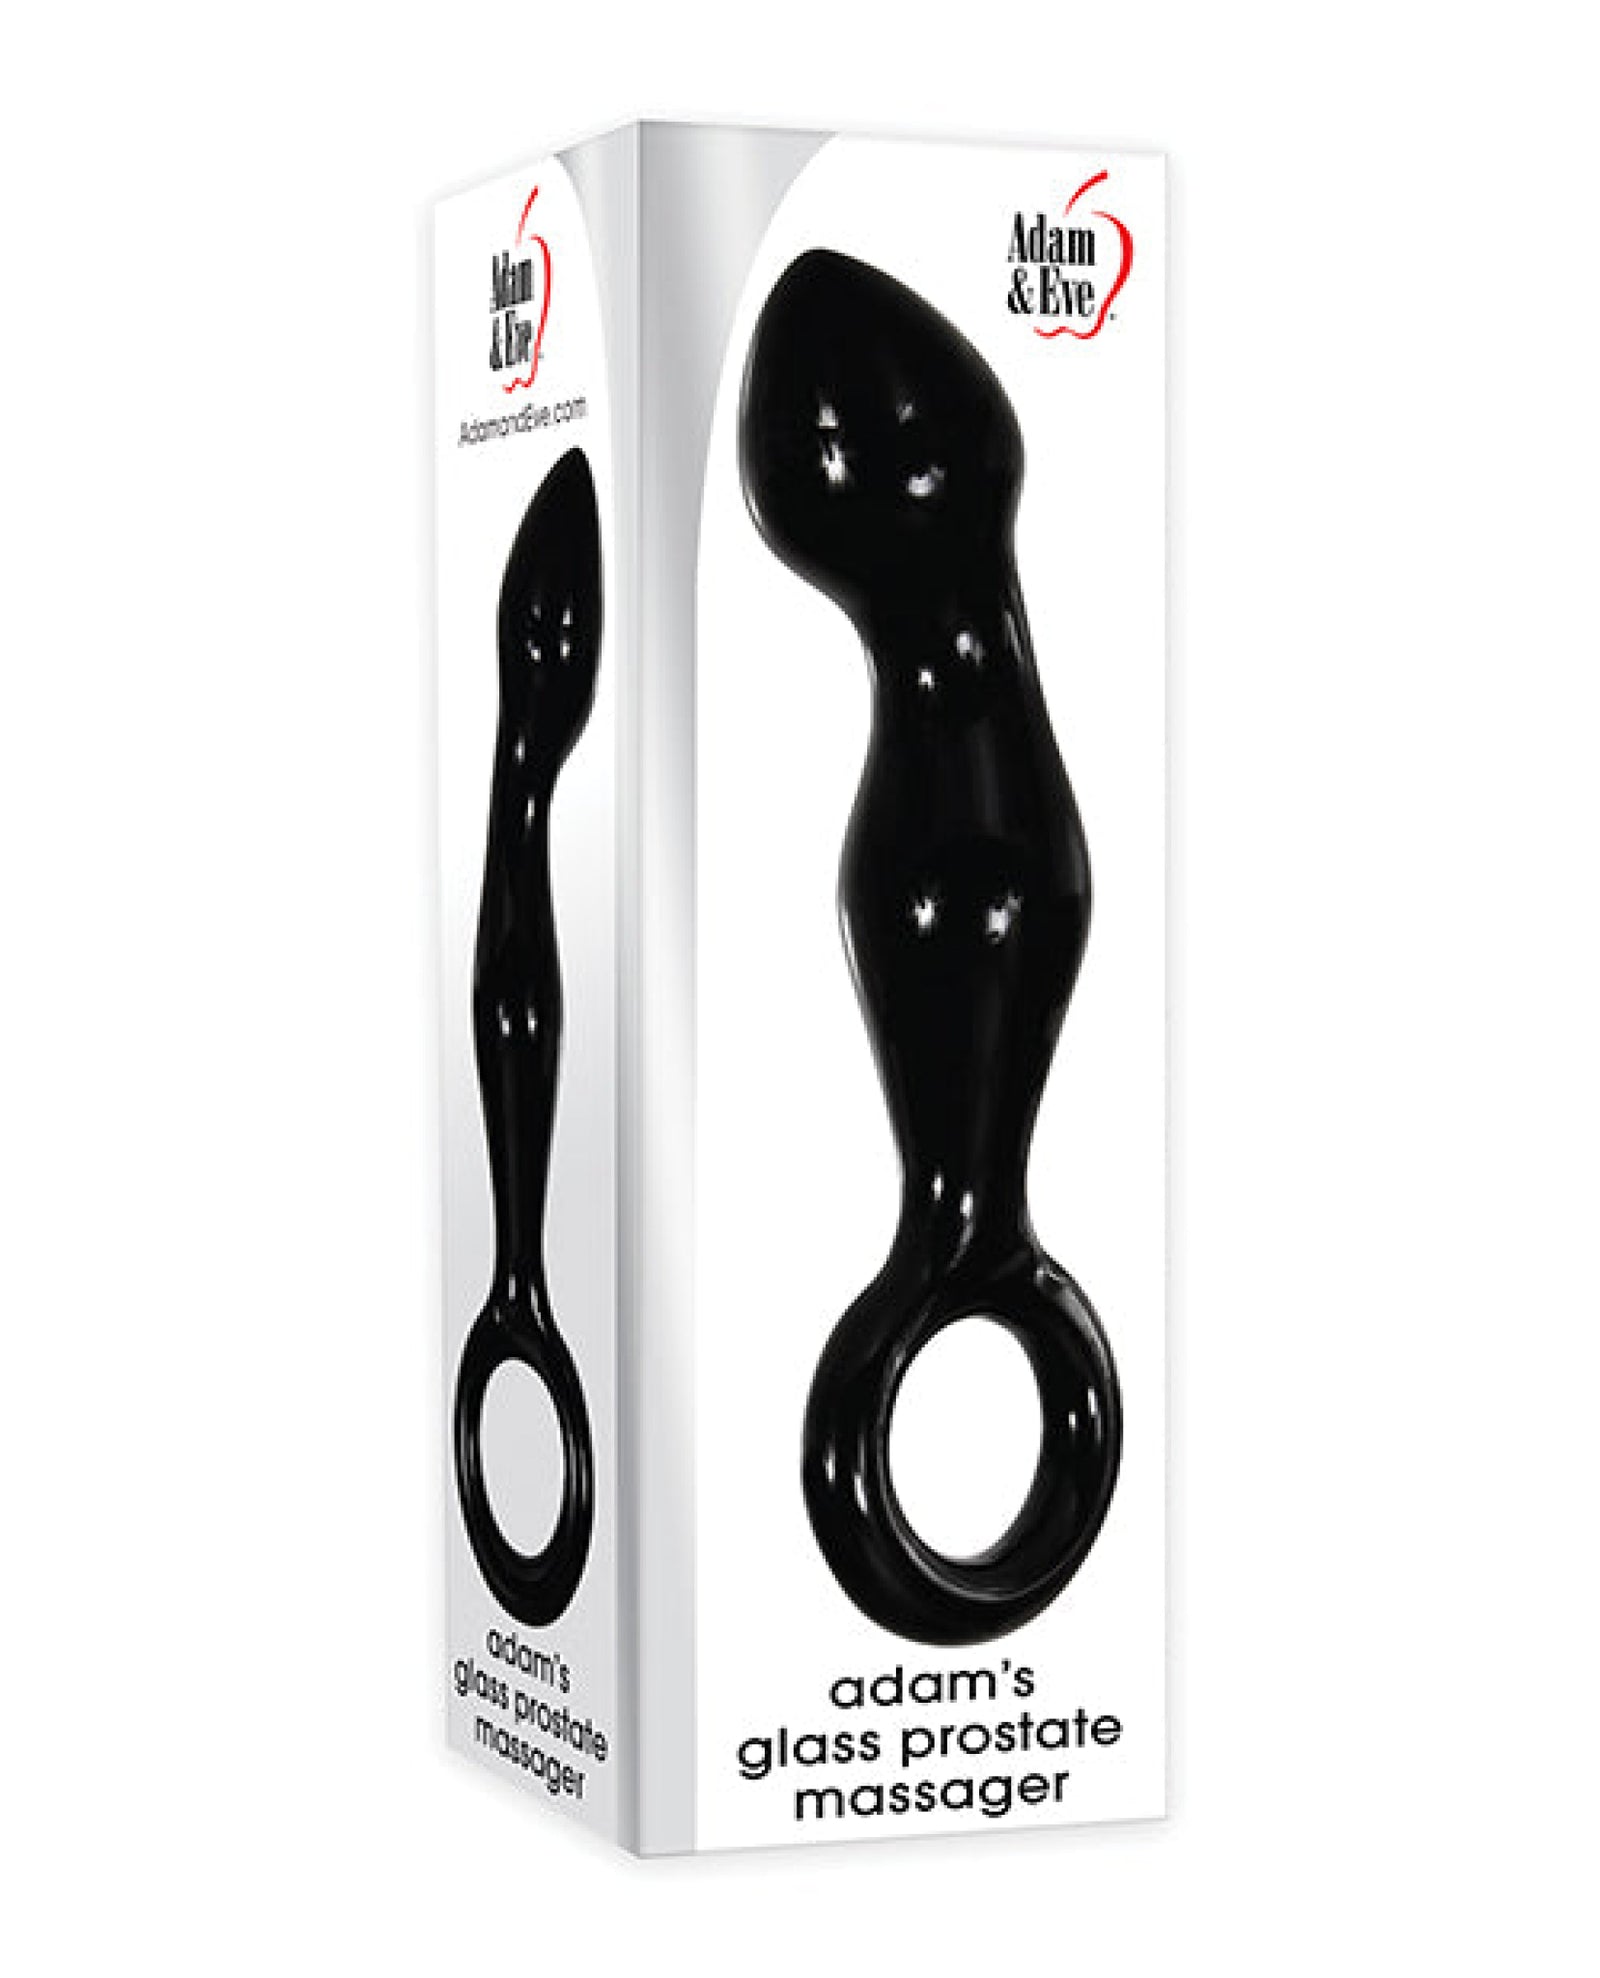 Adam & Eve Adam's Glass Prostate Massager - Black Evolved Novelties